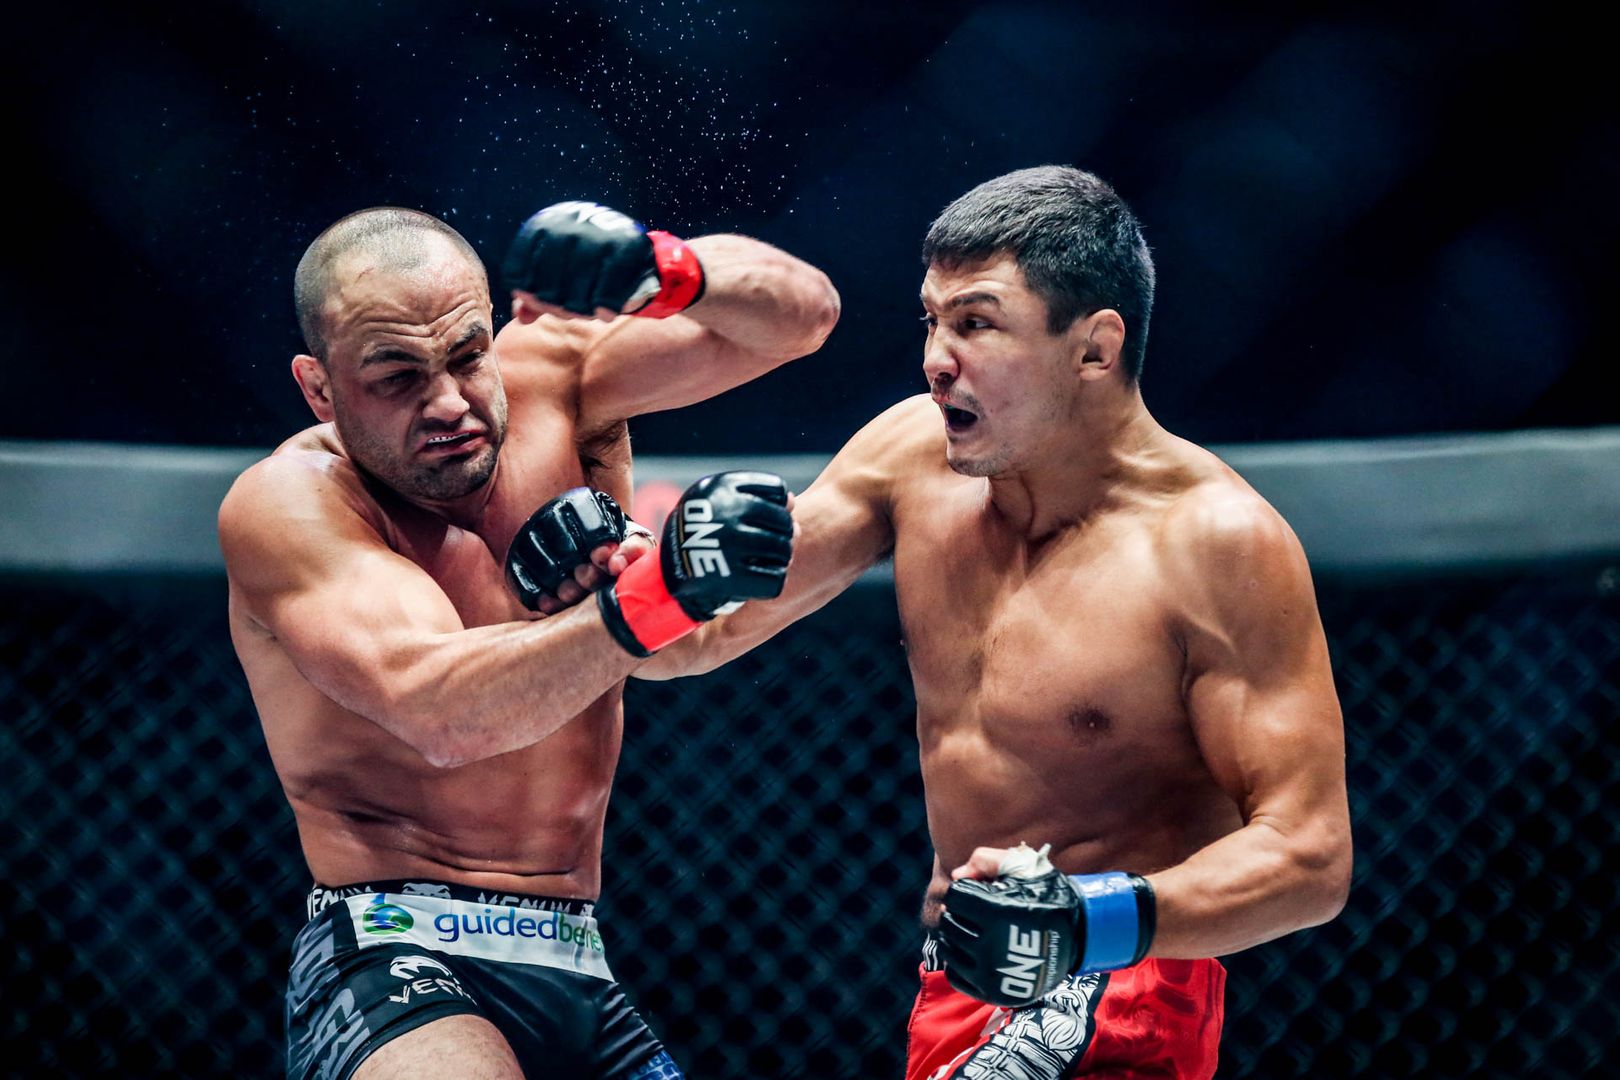 Russian knockout artist Timofey Natsyukhin spoils Eddie Alavarez's debut